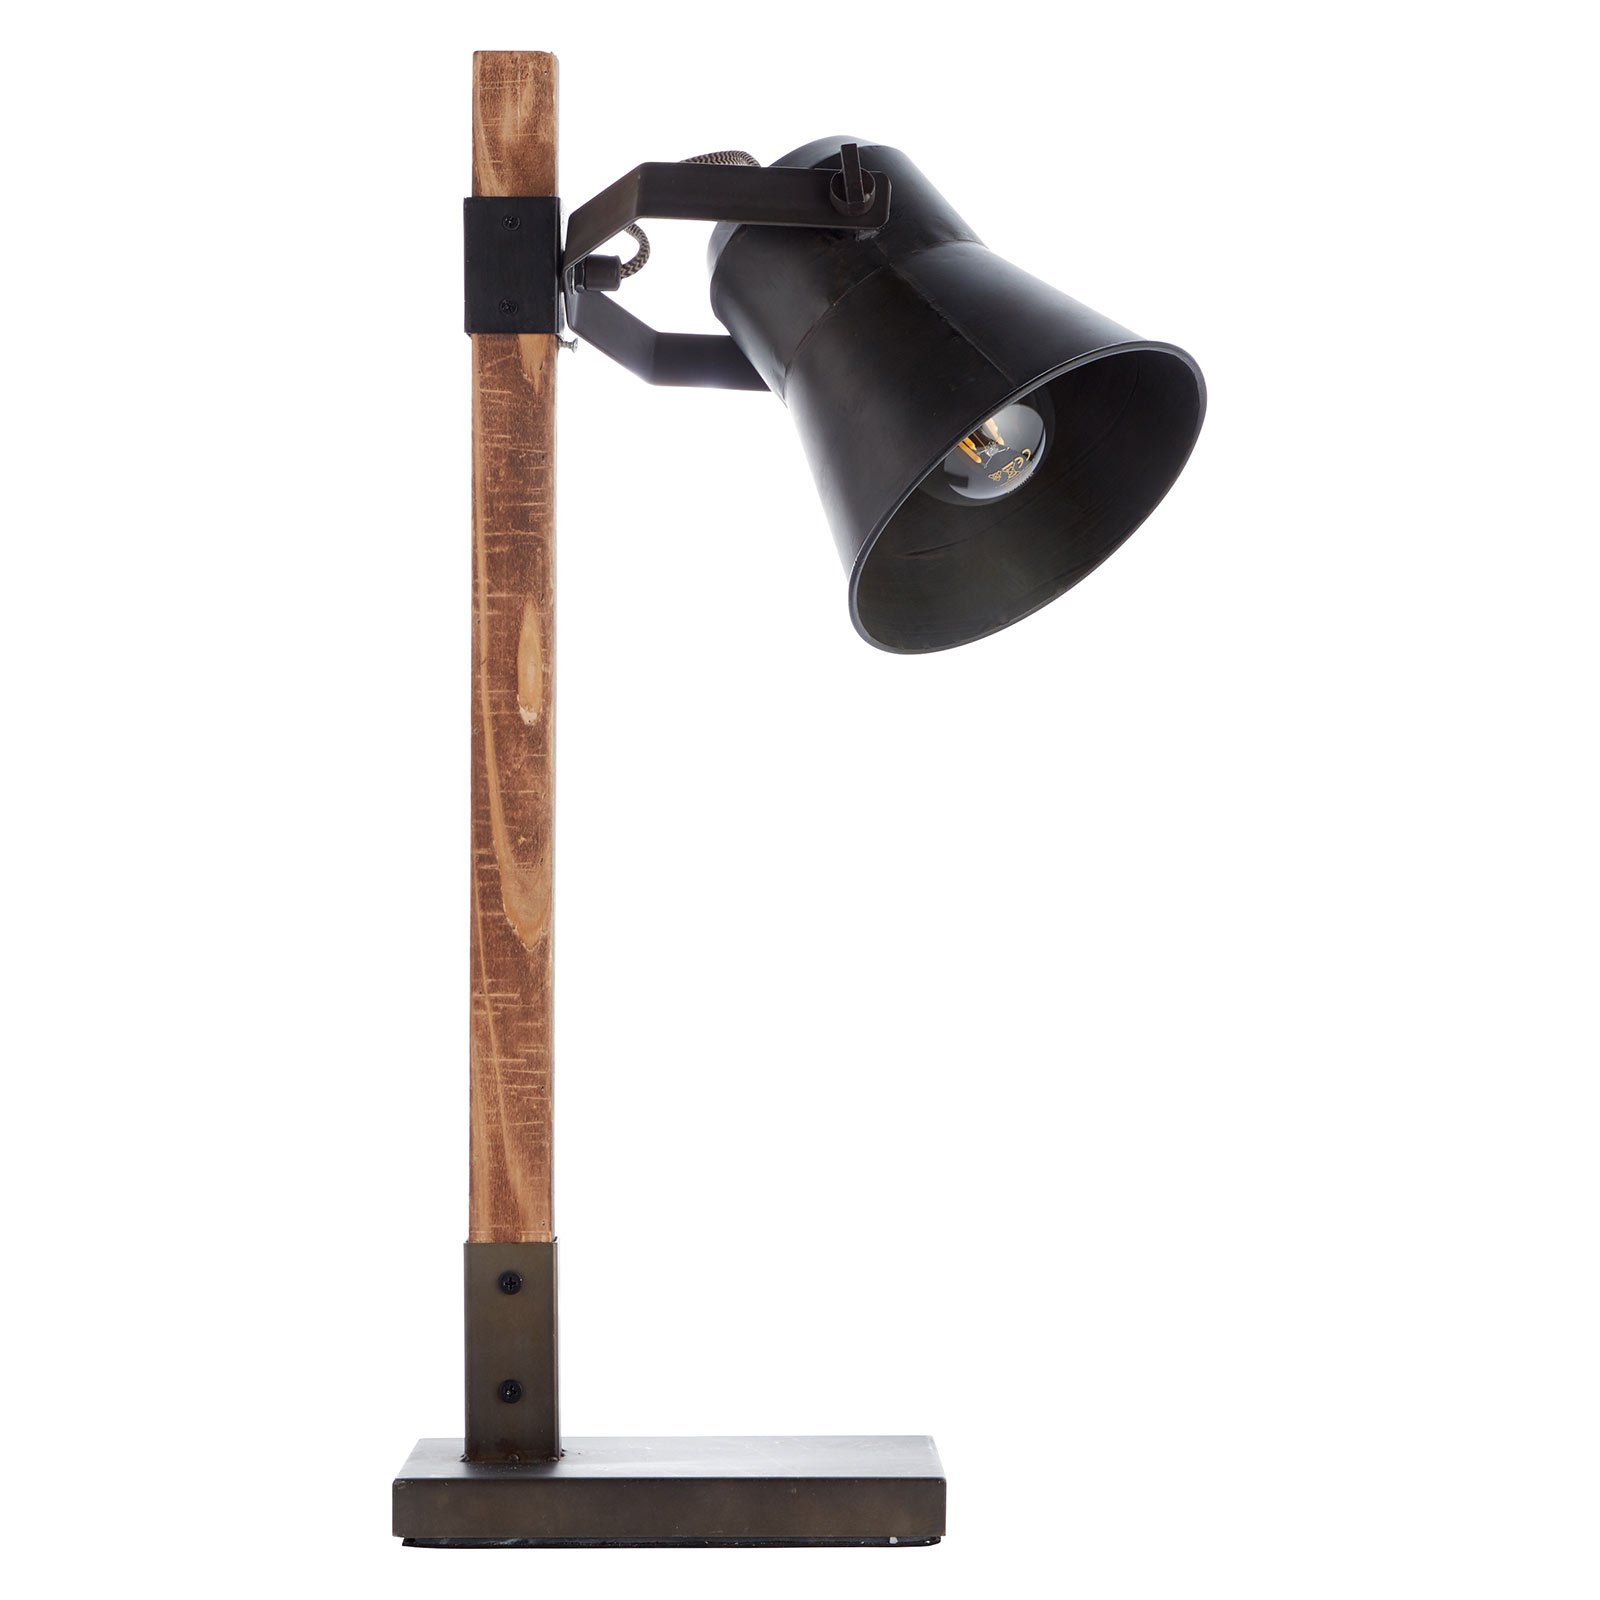 Plow table lamp, black/dark wood